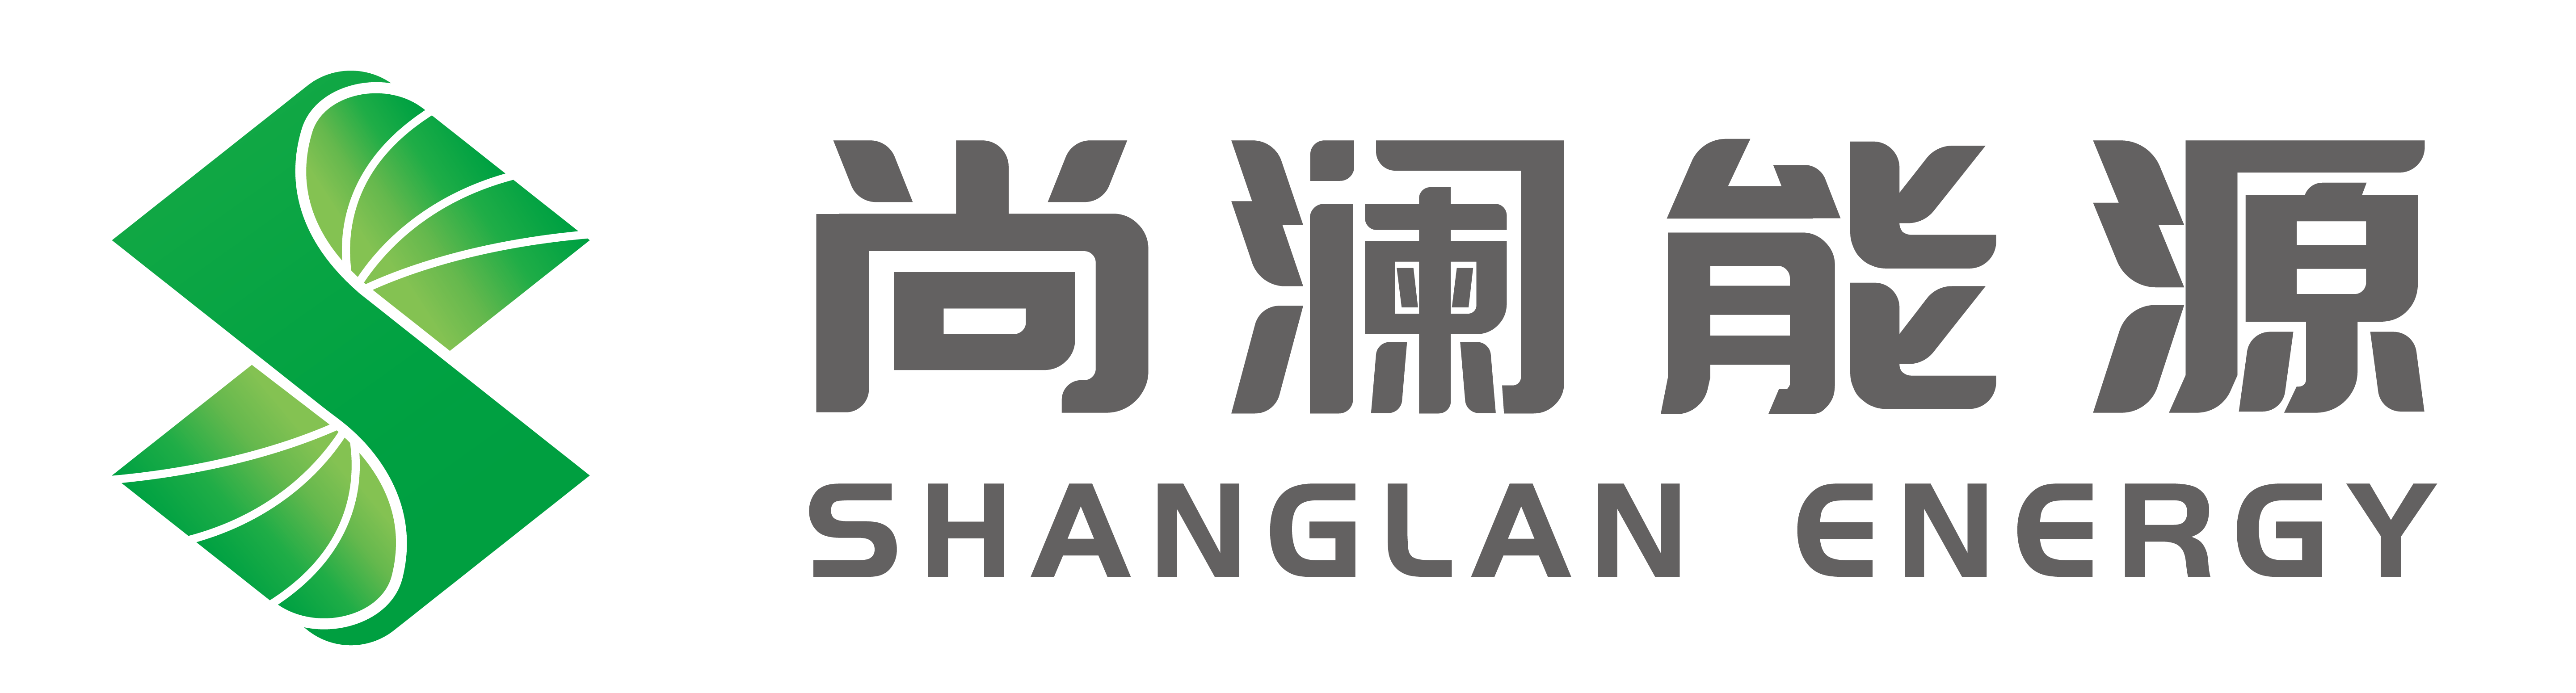 Shanglan New Energy Technology Co., Ltd.